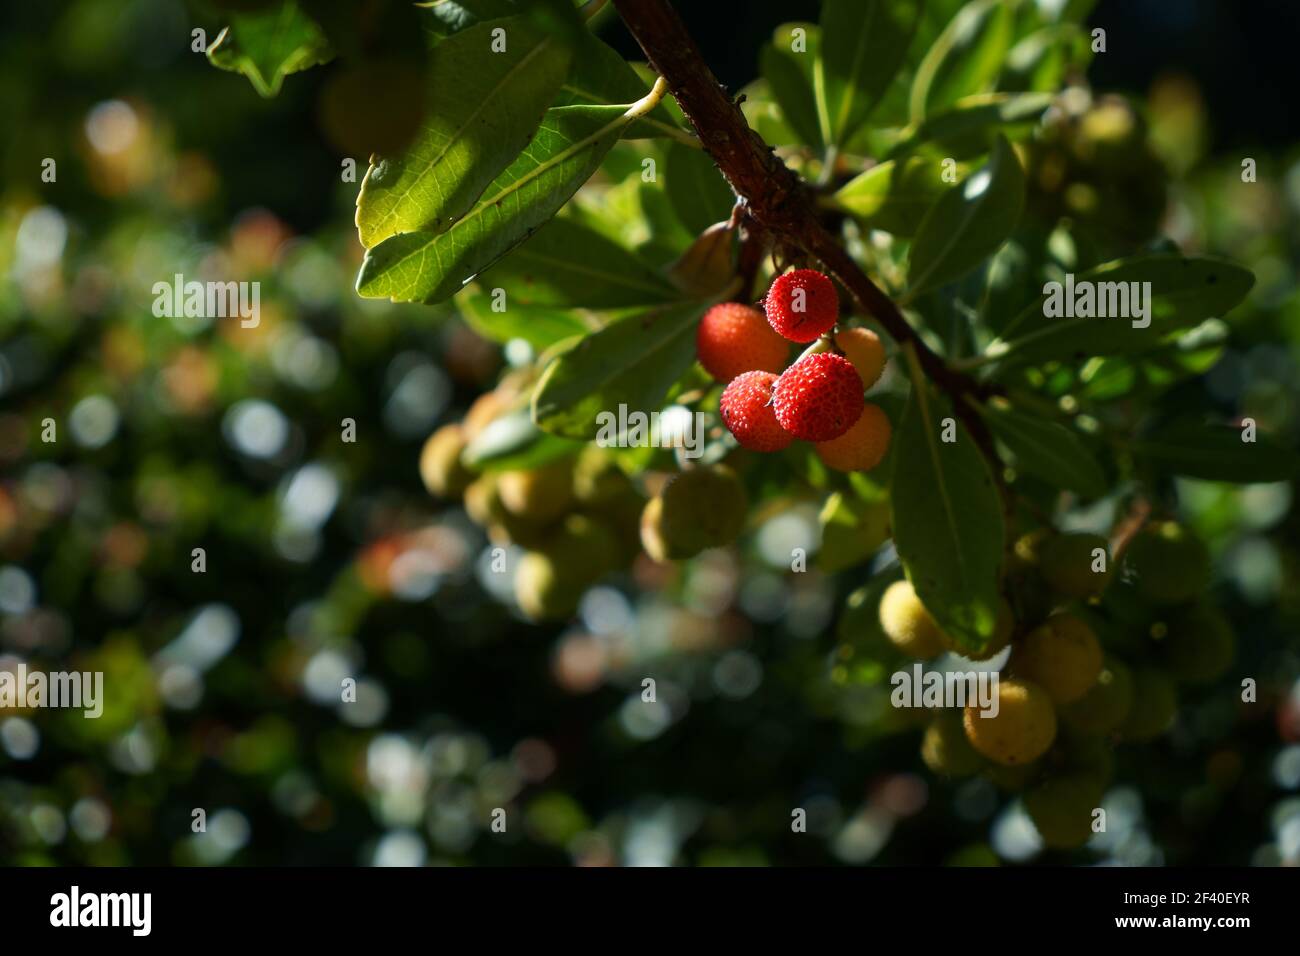 Arbutus tree, ripe strawberry tree fruits in Granada Stock Photo